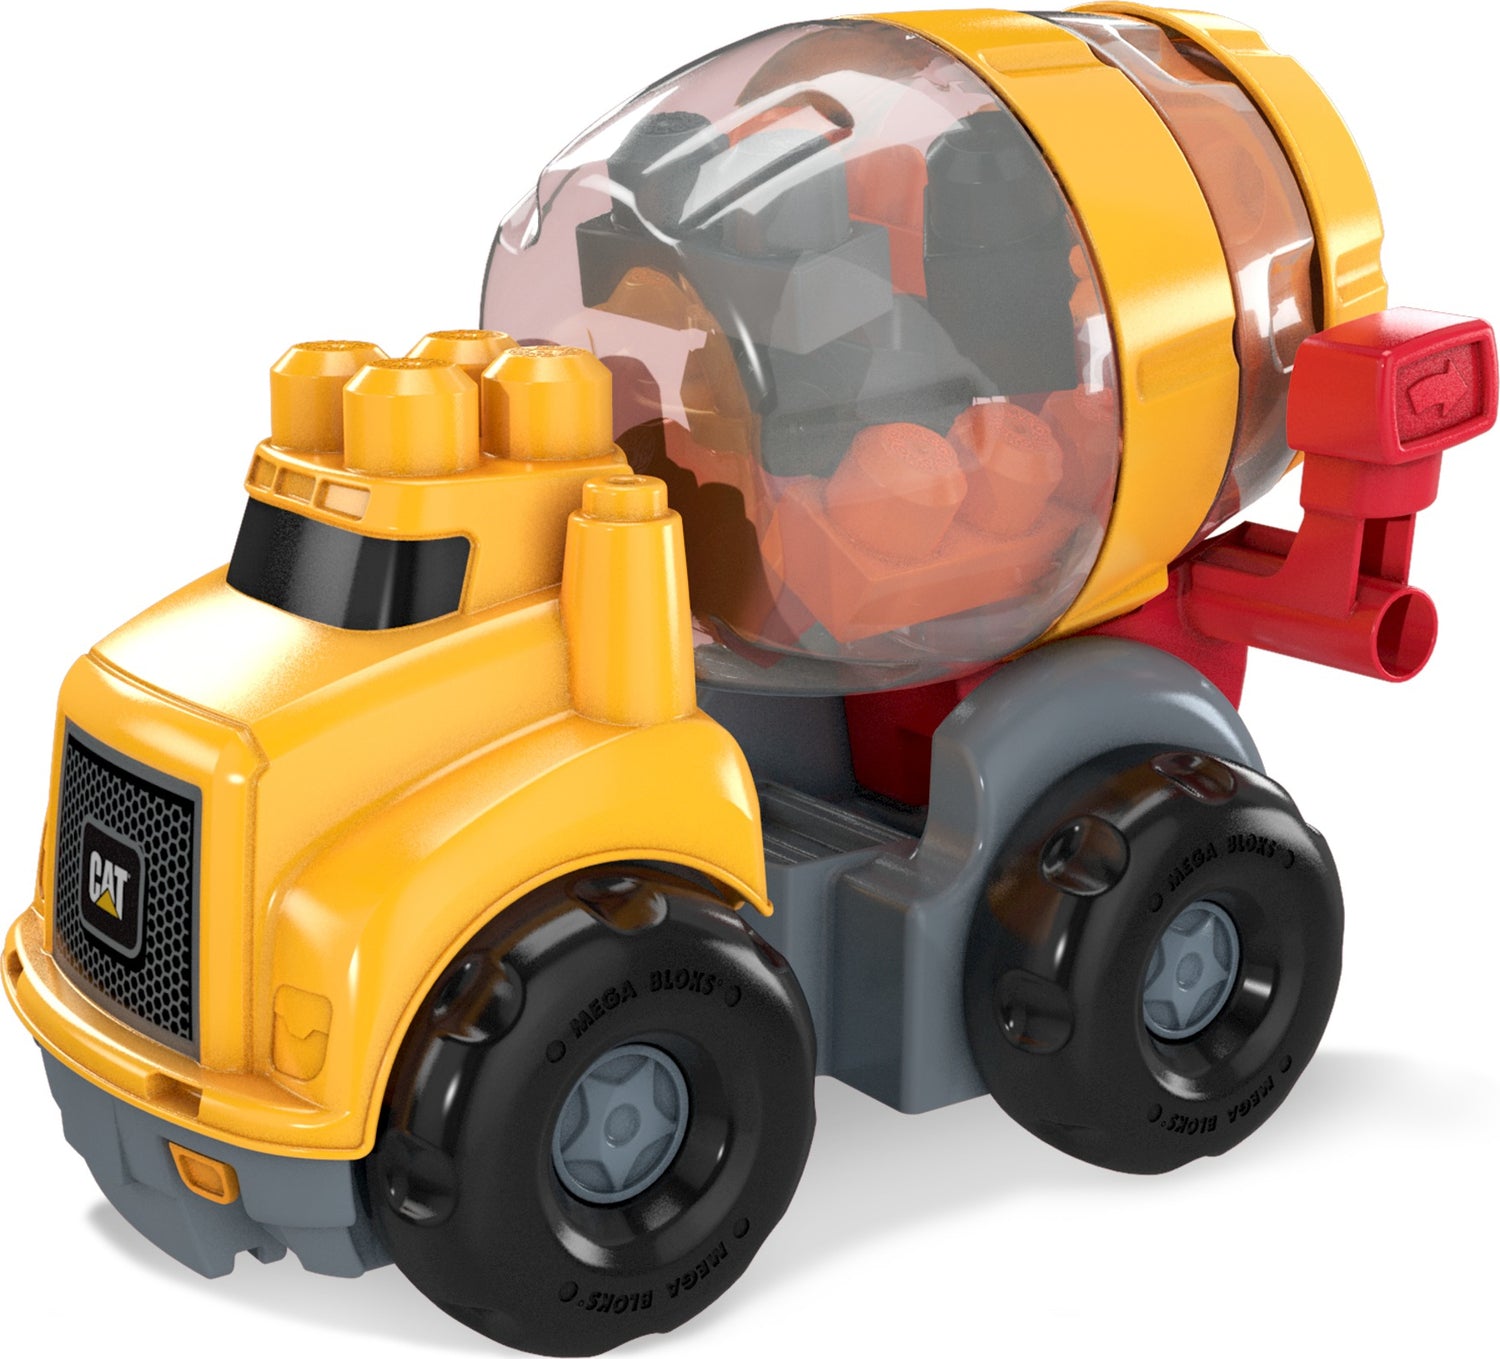 Mega Bloks CAT toy vehicle